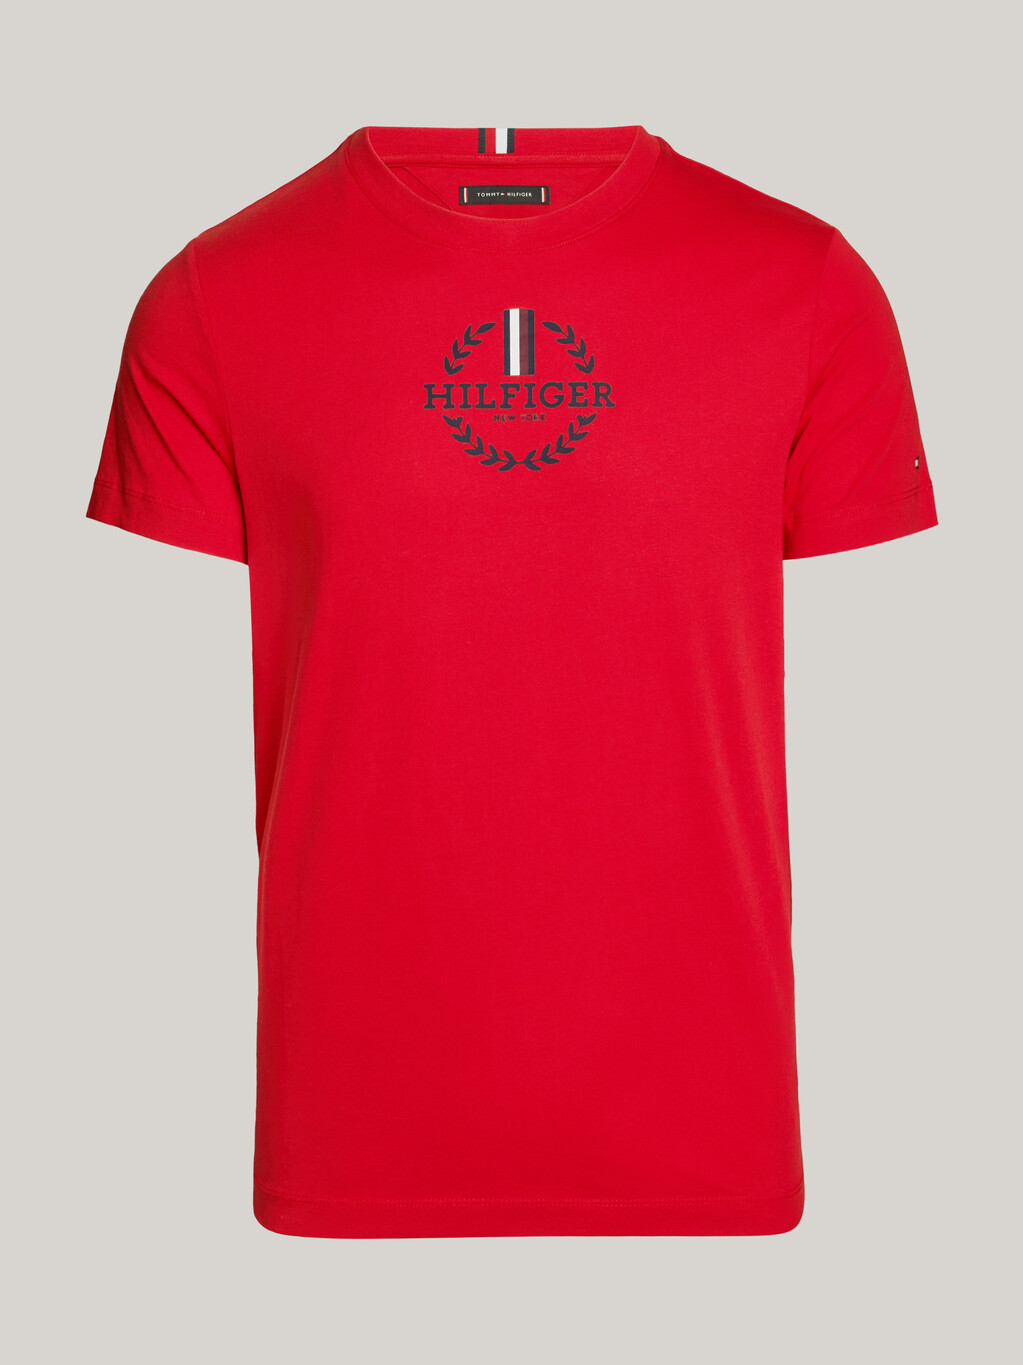 Global Stripe Archive Crest Logo Slim T-Shirt, Primary Red, hi-res